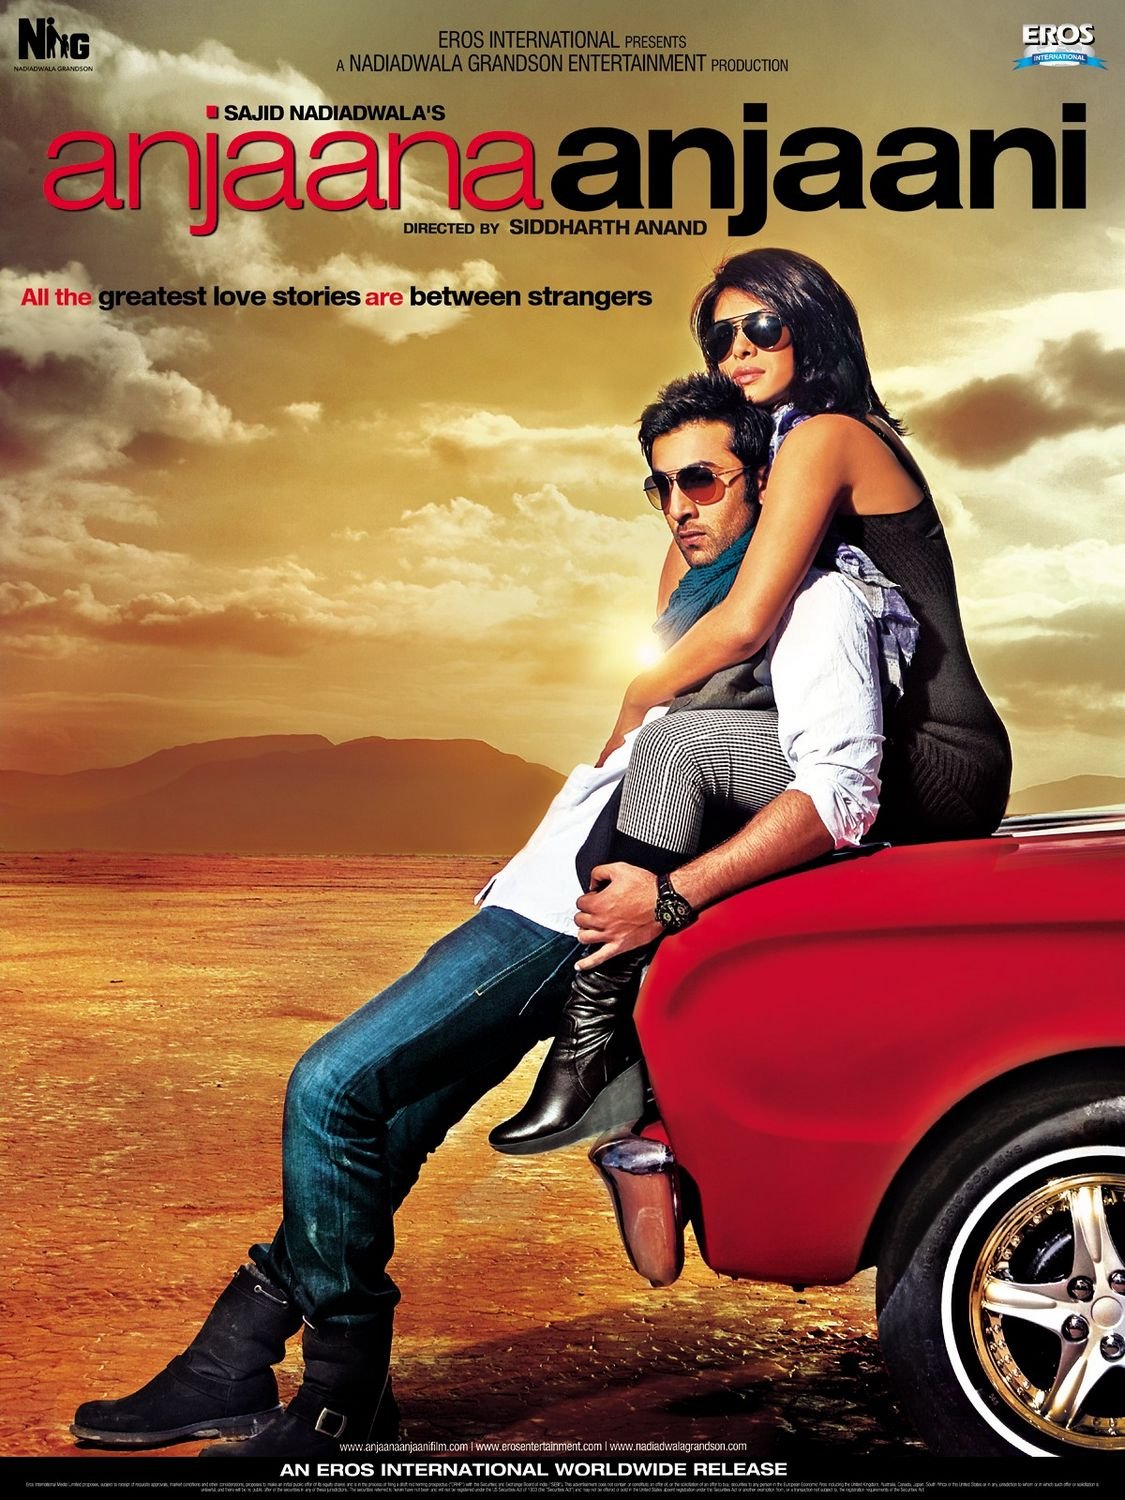 Hindi poster of the movie Anjaana Anjaani